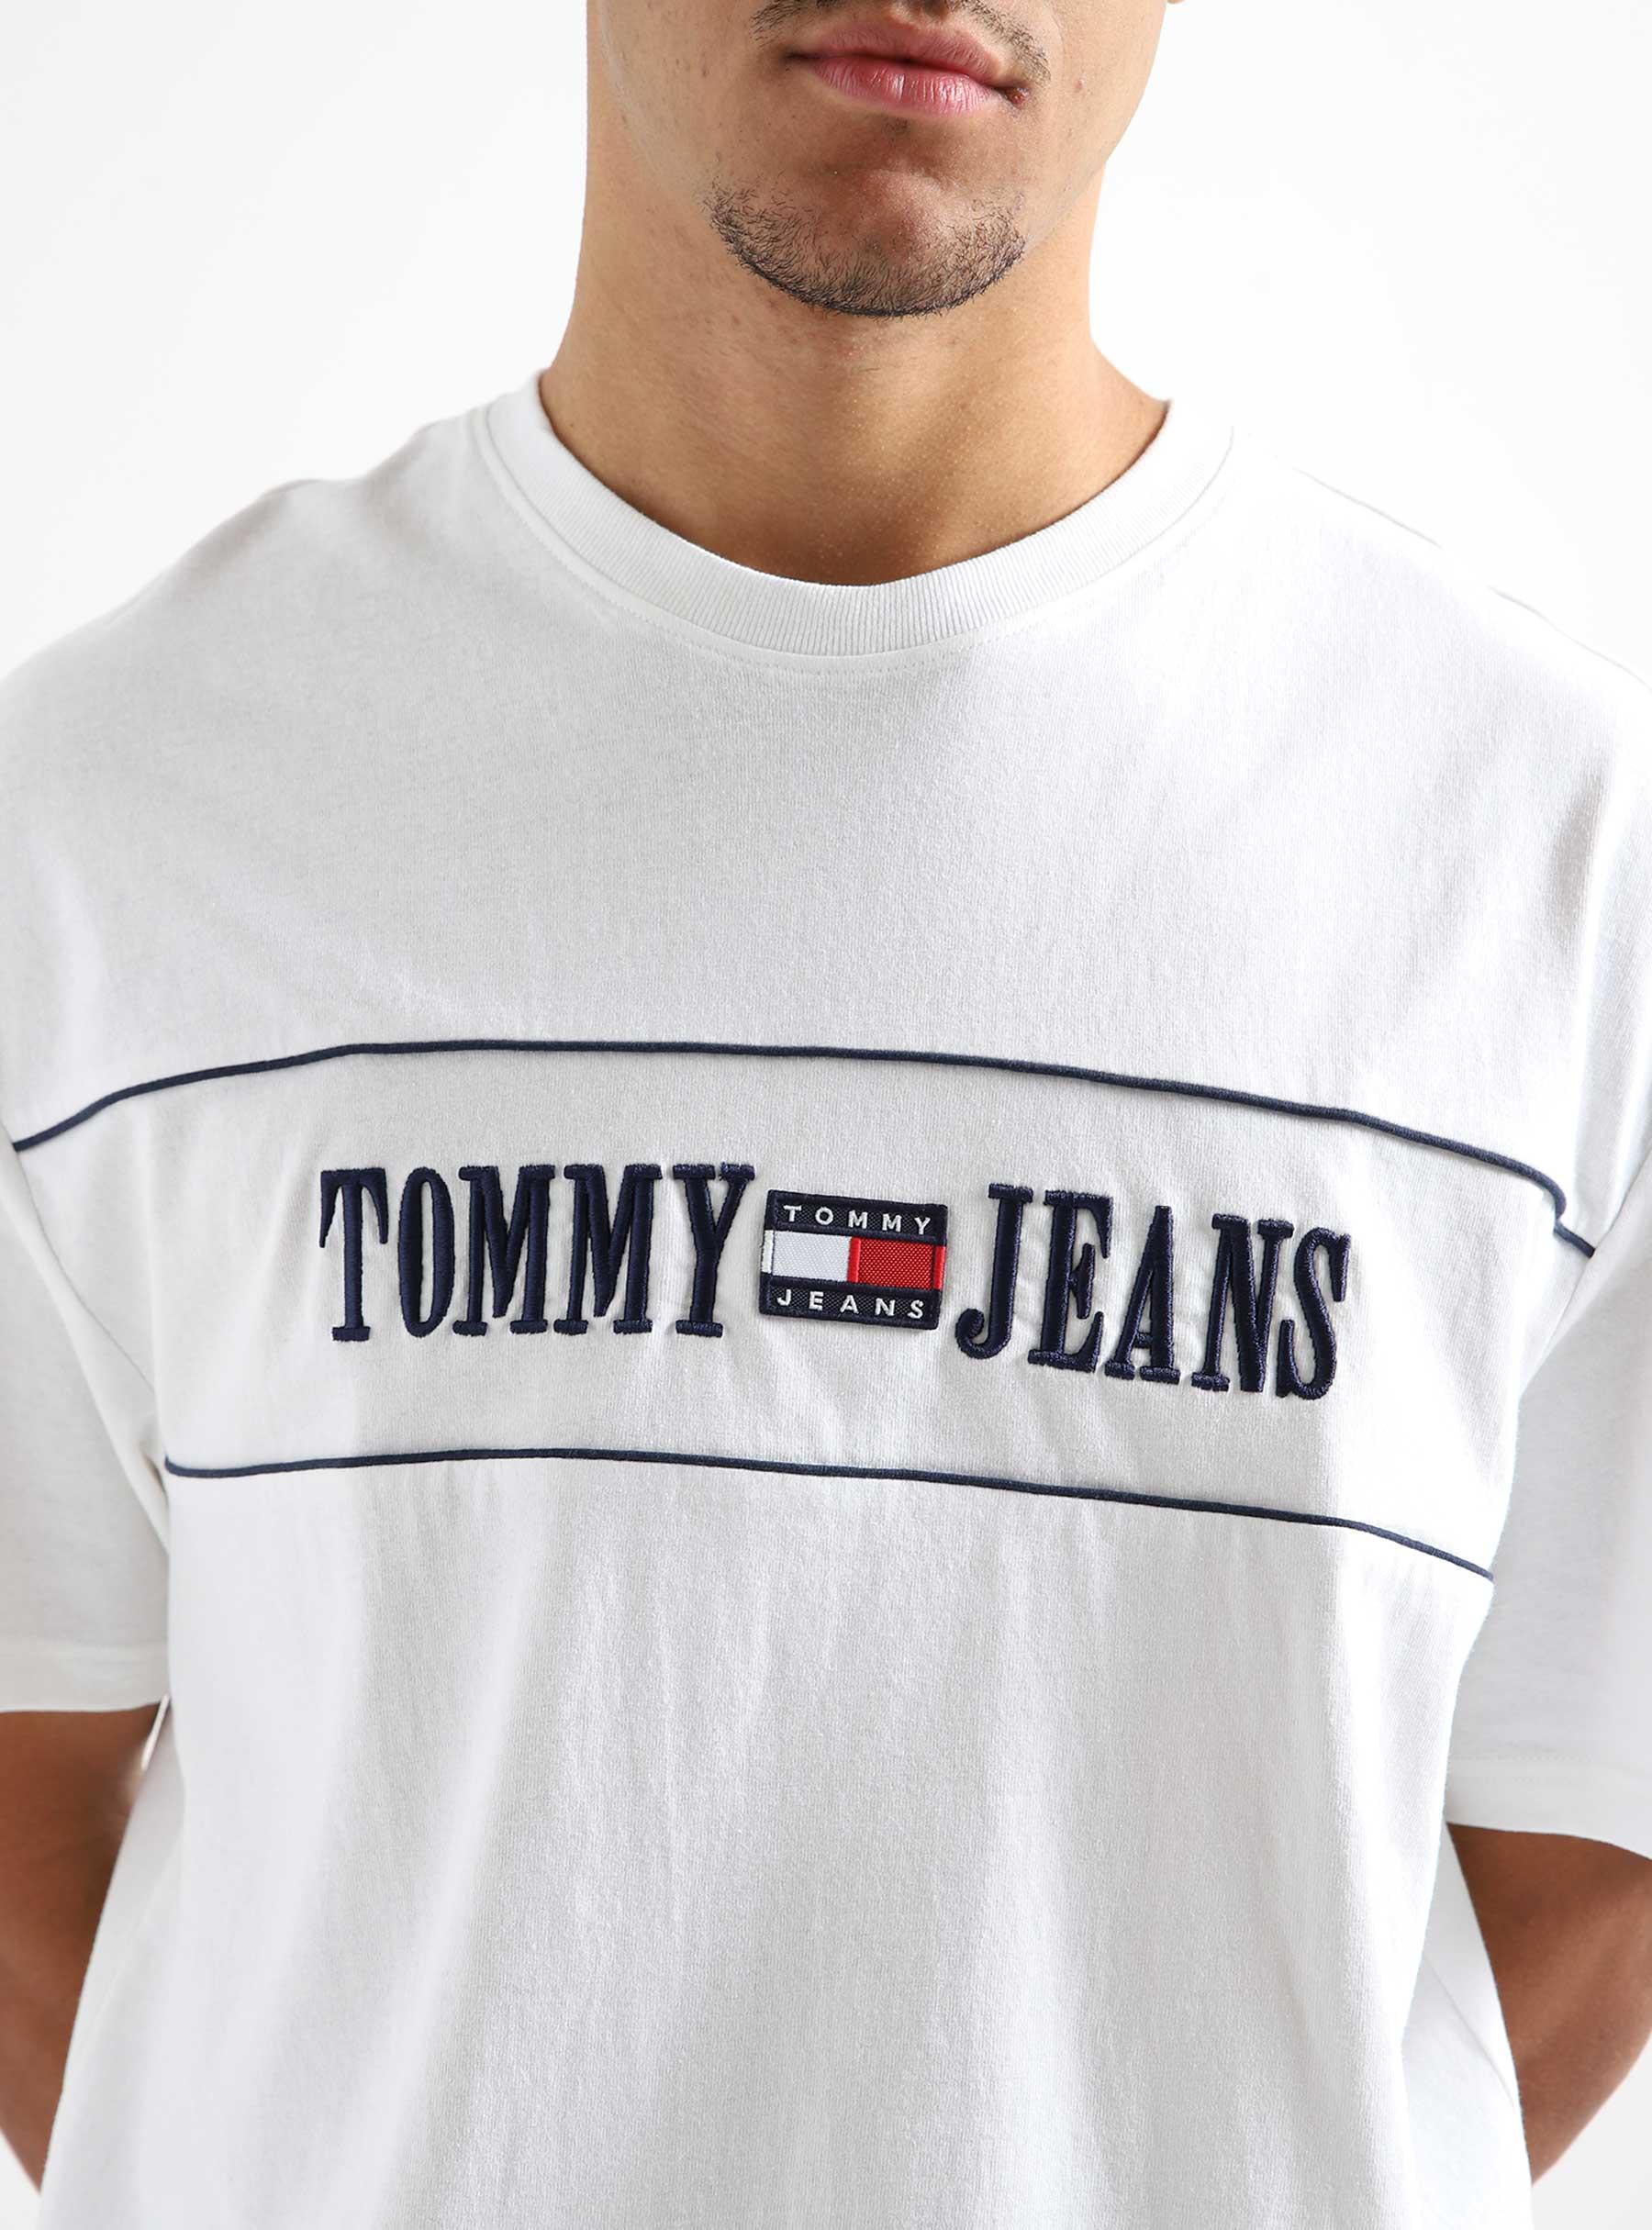 Tommy Jeans TJM Skate Archive T-shirt White - Freshcotton